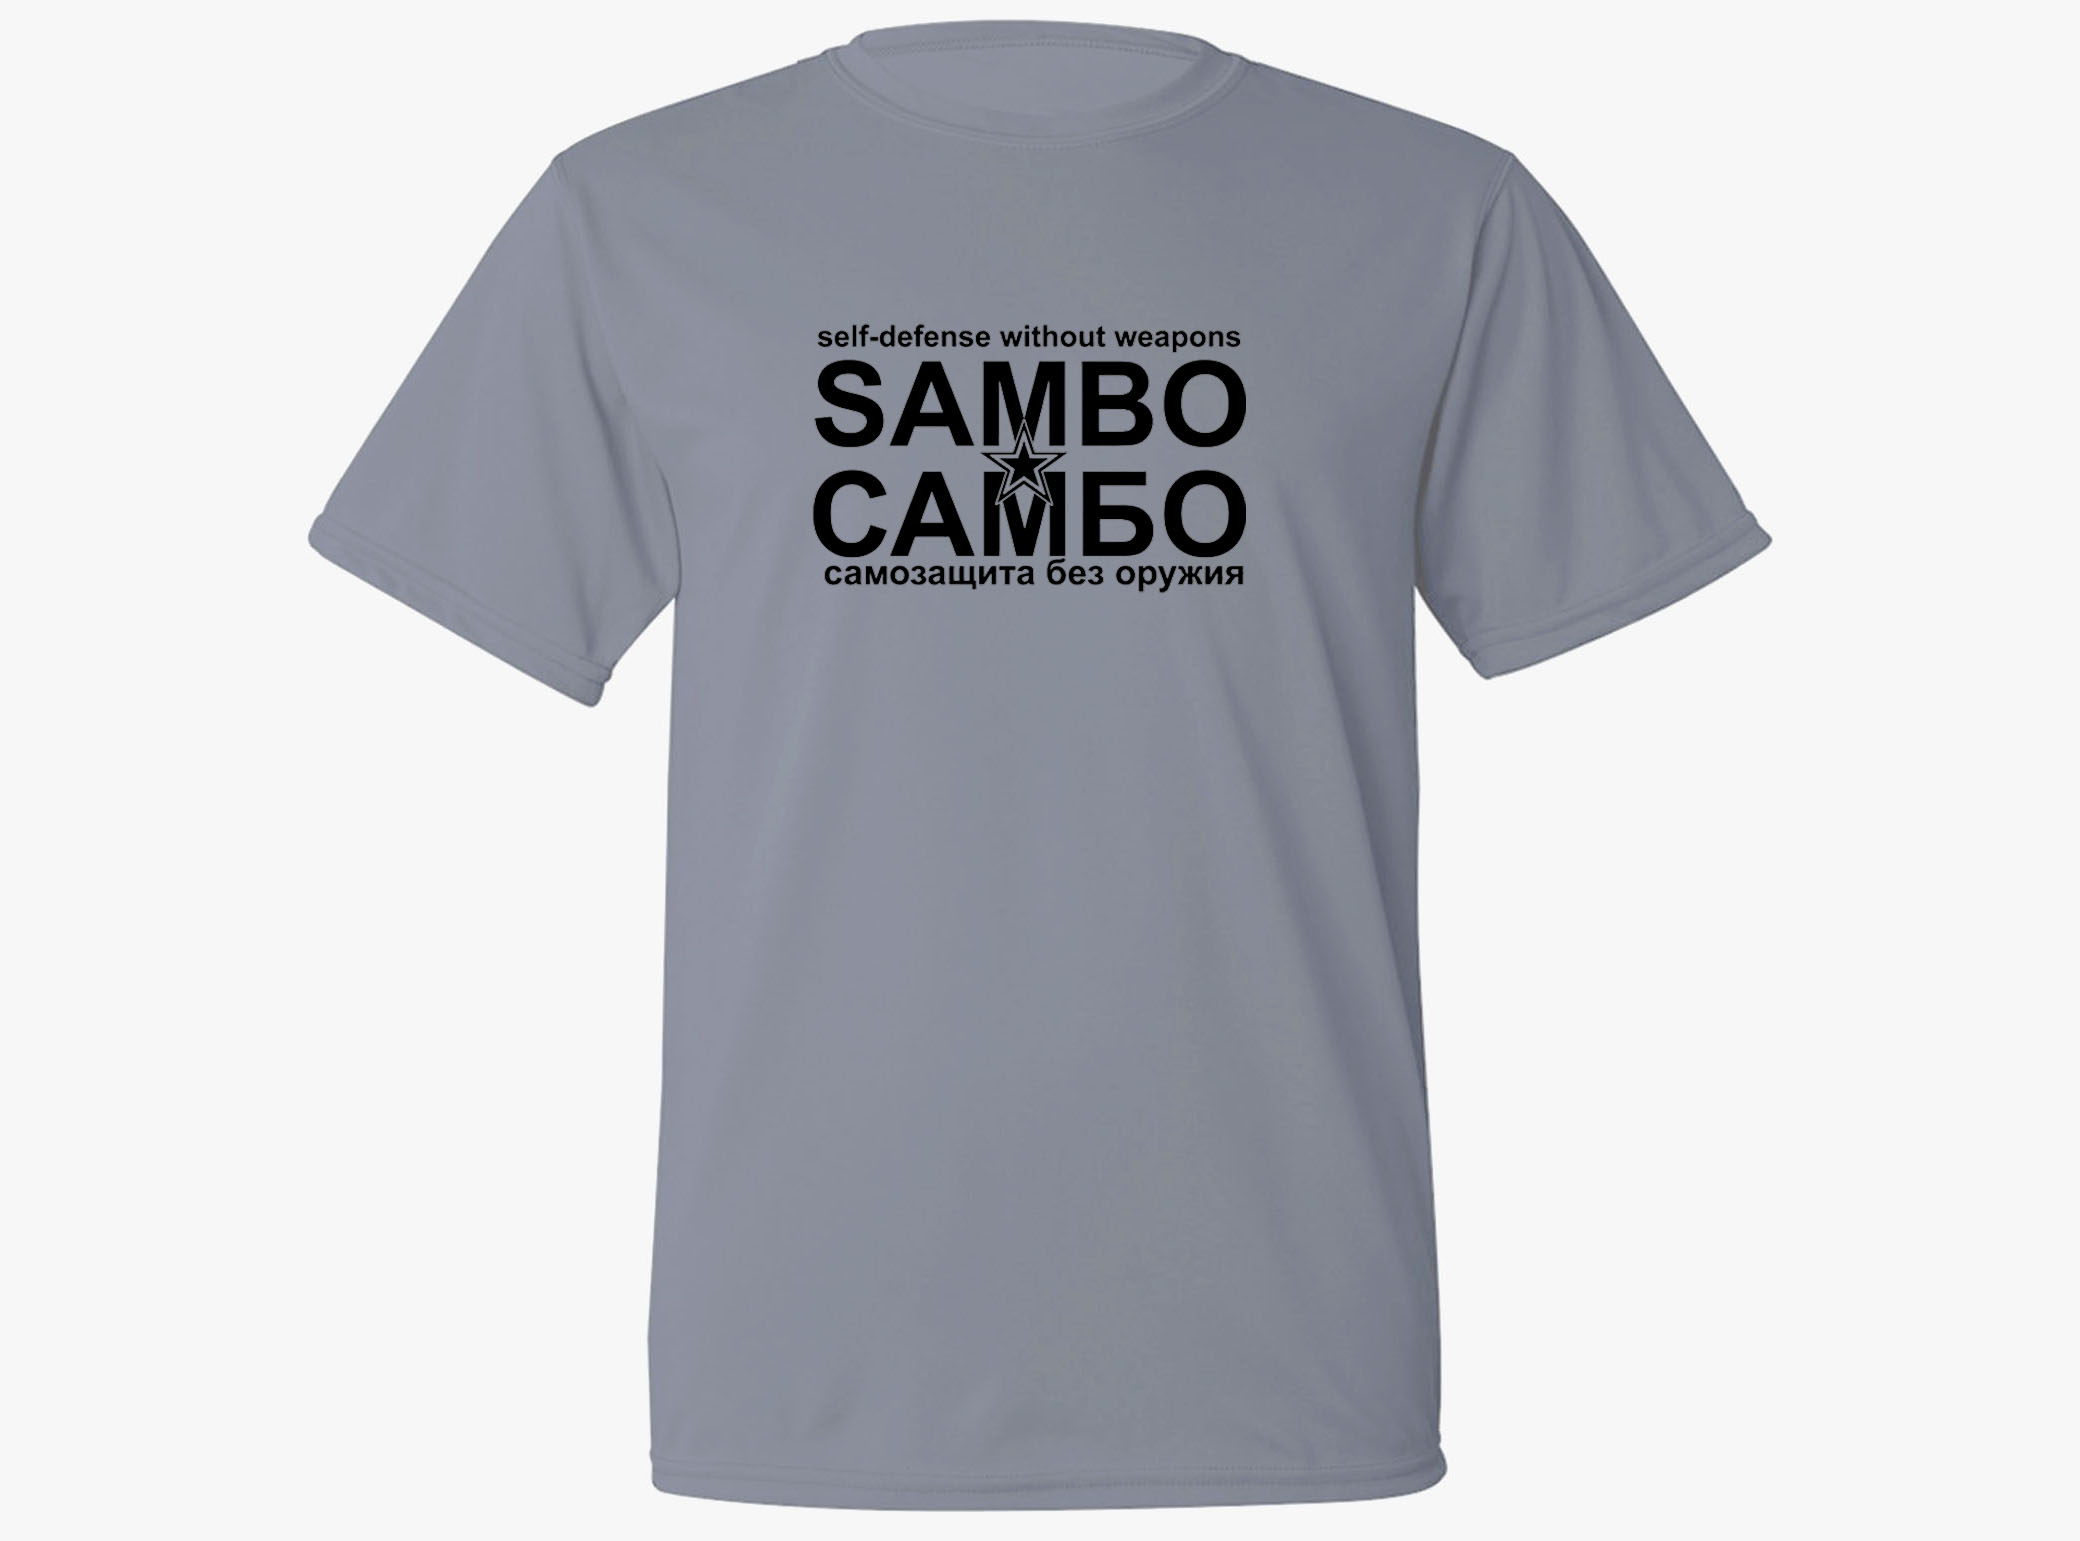 Sambo Russian martial arts sweat proof fabric gray t-shirt